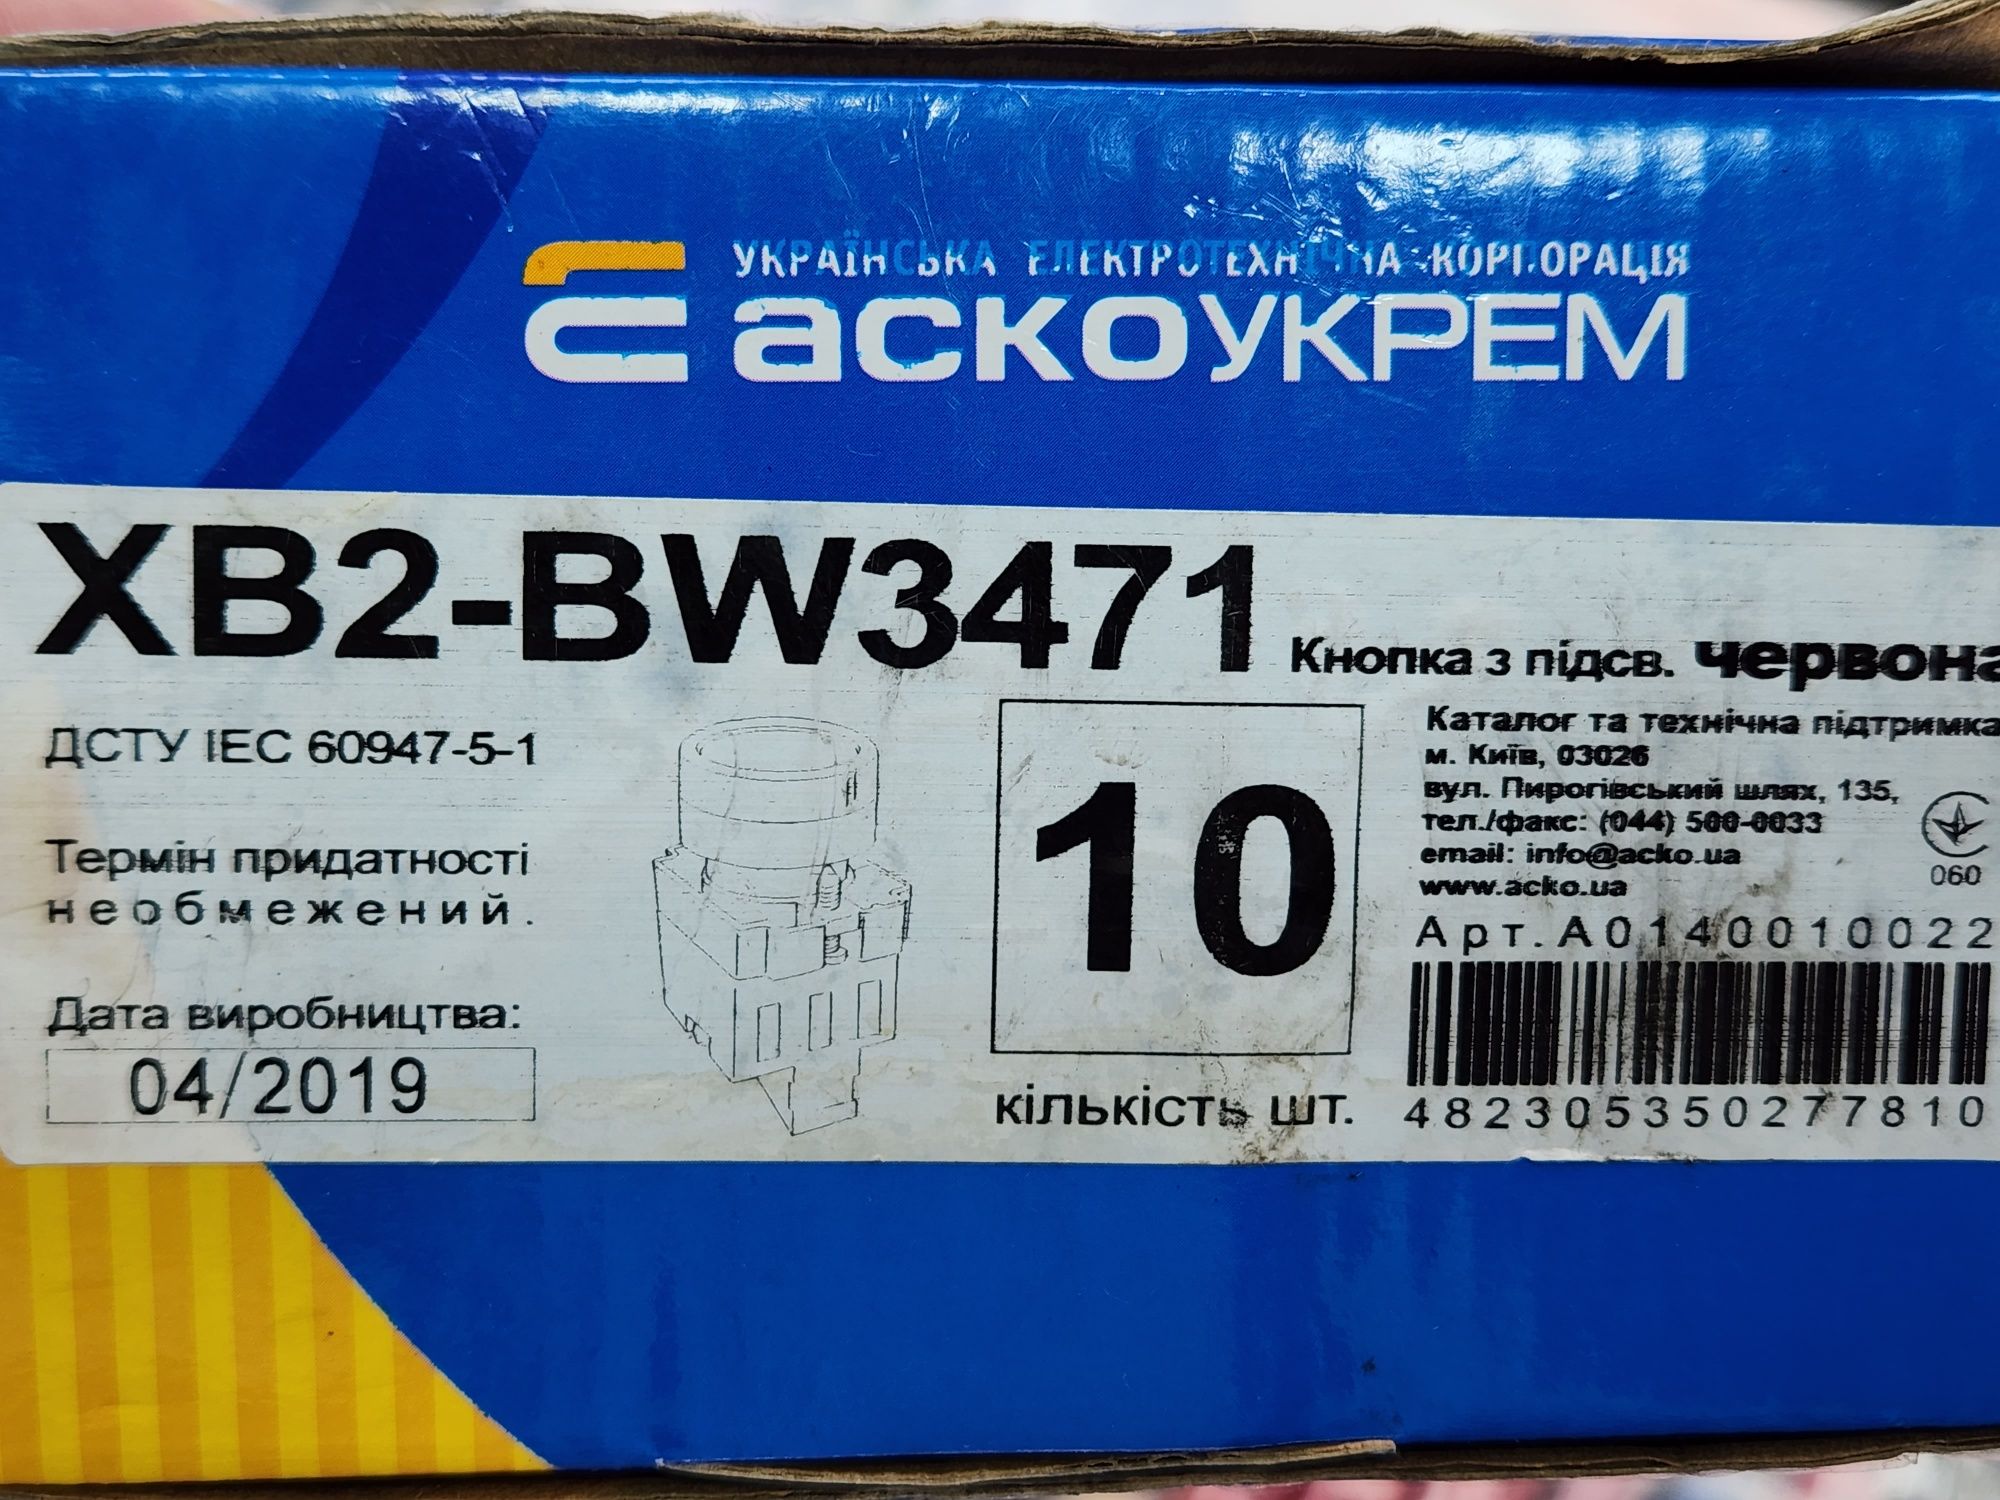 Кнопка XB2-BW3471 1NC красная с подсветкой Аско Укрем